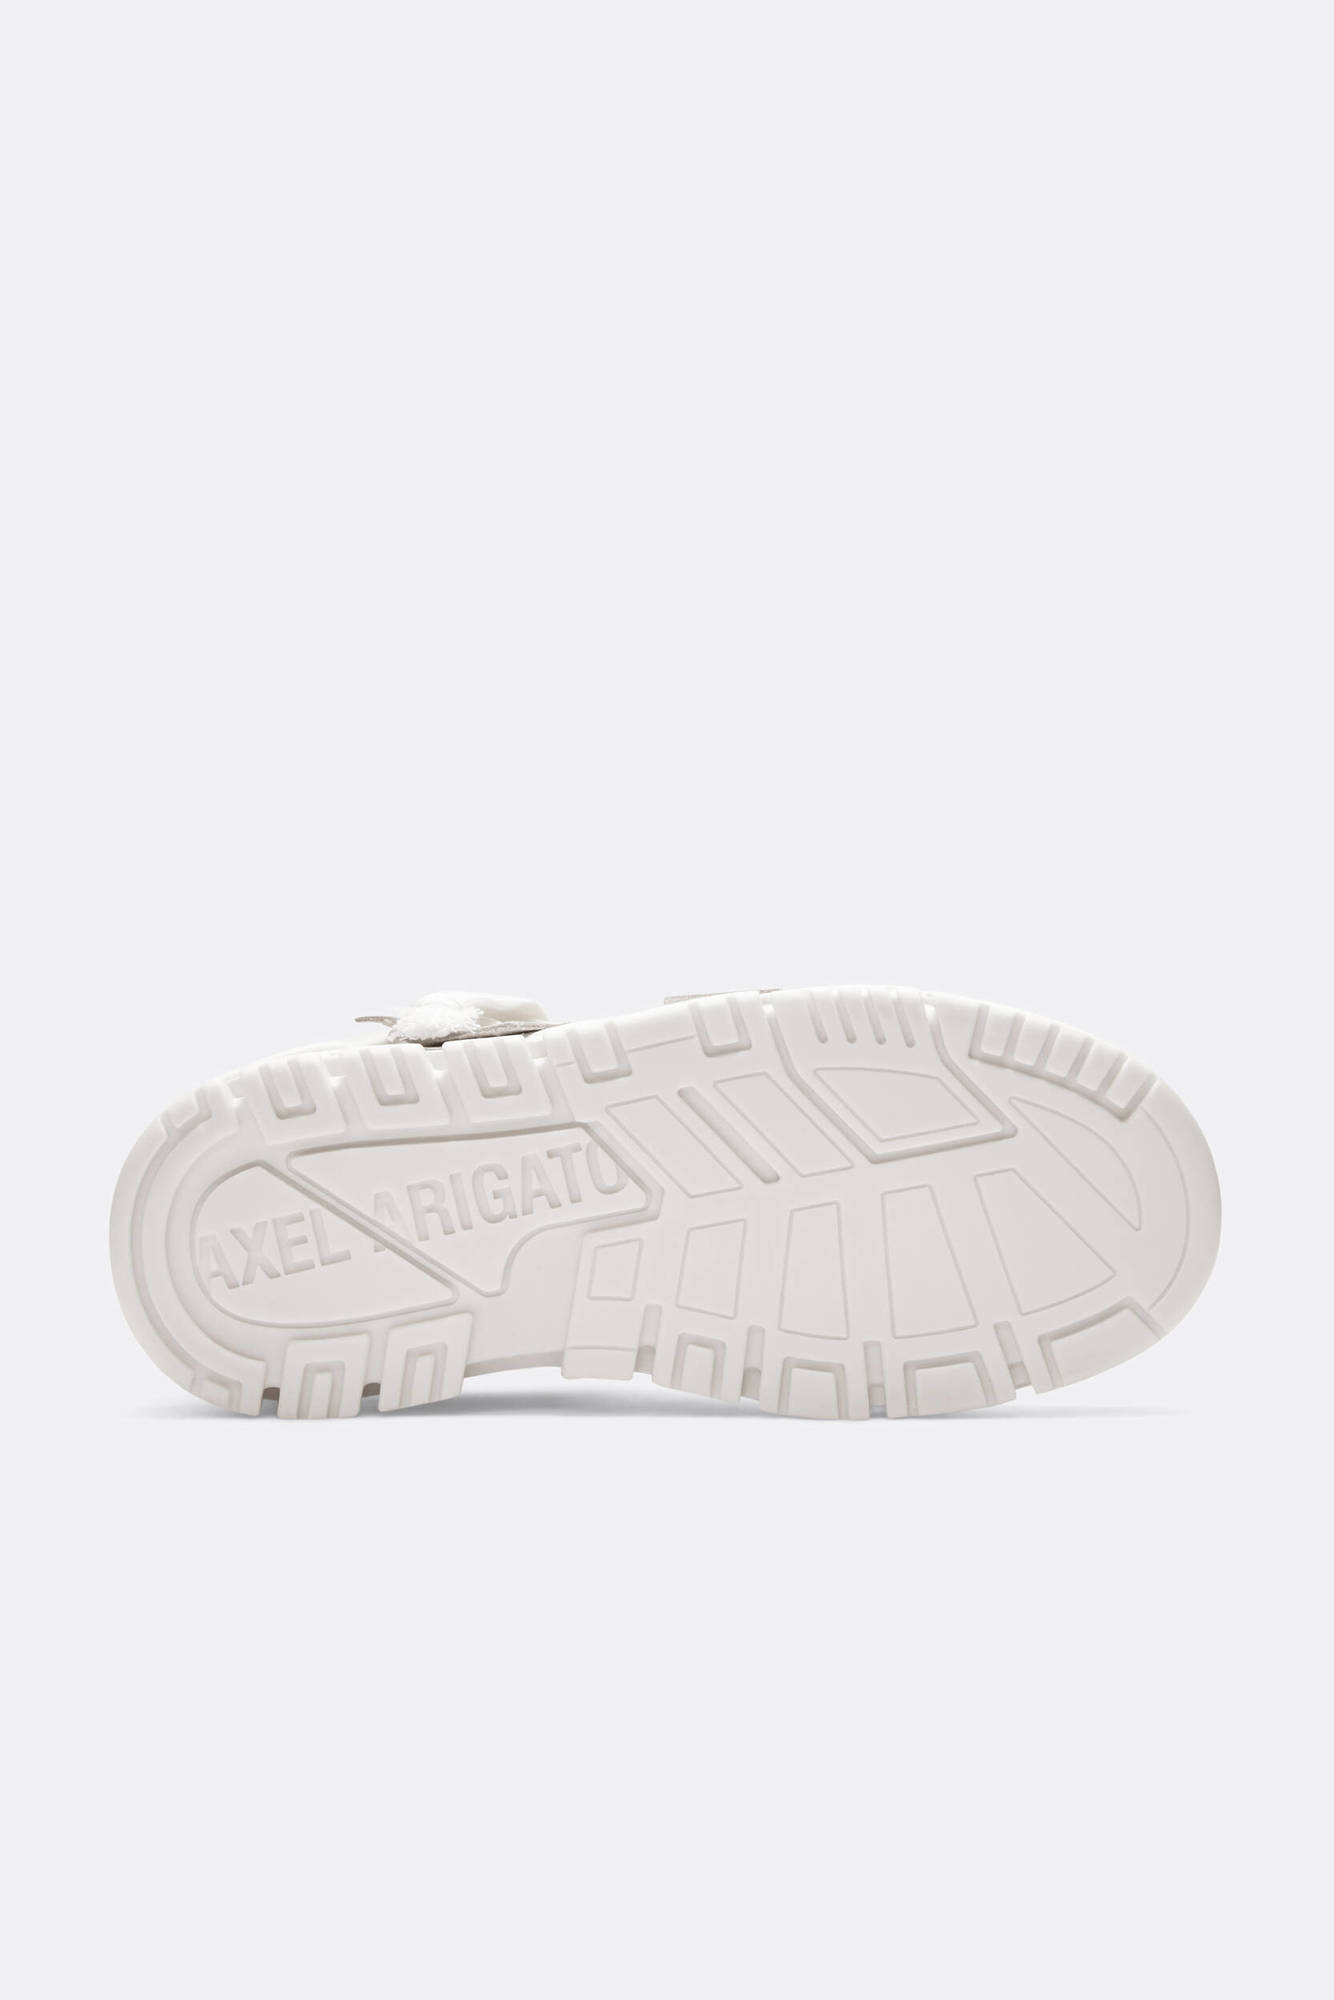 AXEL ARIGATO Area Patchwork Sneaker in White/White